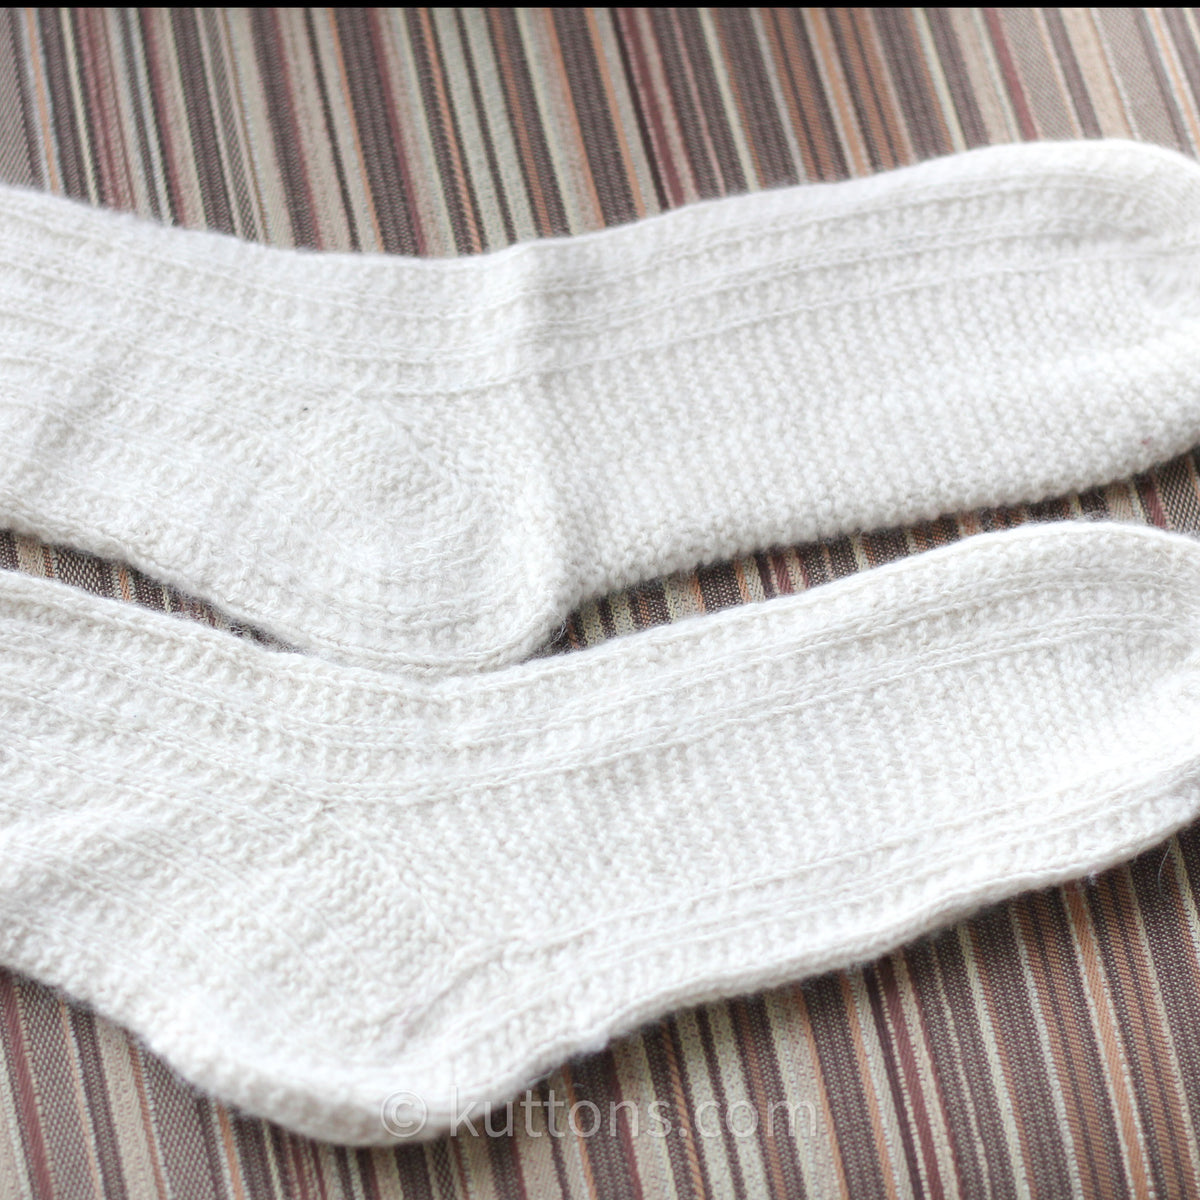 Women's Cashmere Socks - Softest 100% Pure Pashmina Cashmere Indoor Bed Socks from Ladakh Himalayas - Handspun & Handknit Cashmere Wool | Milk White, L/XL